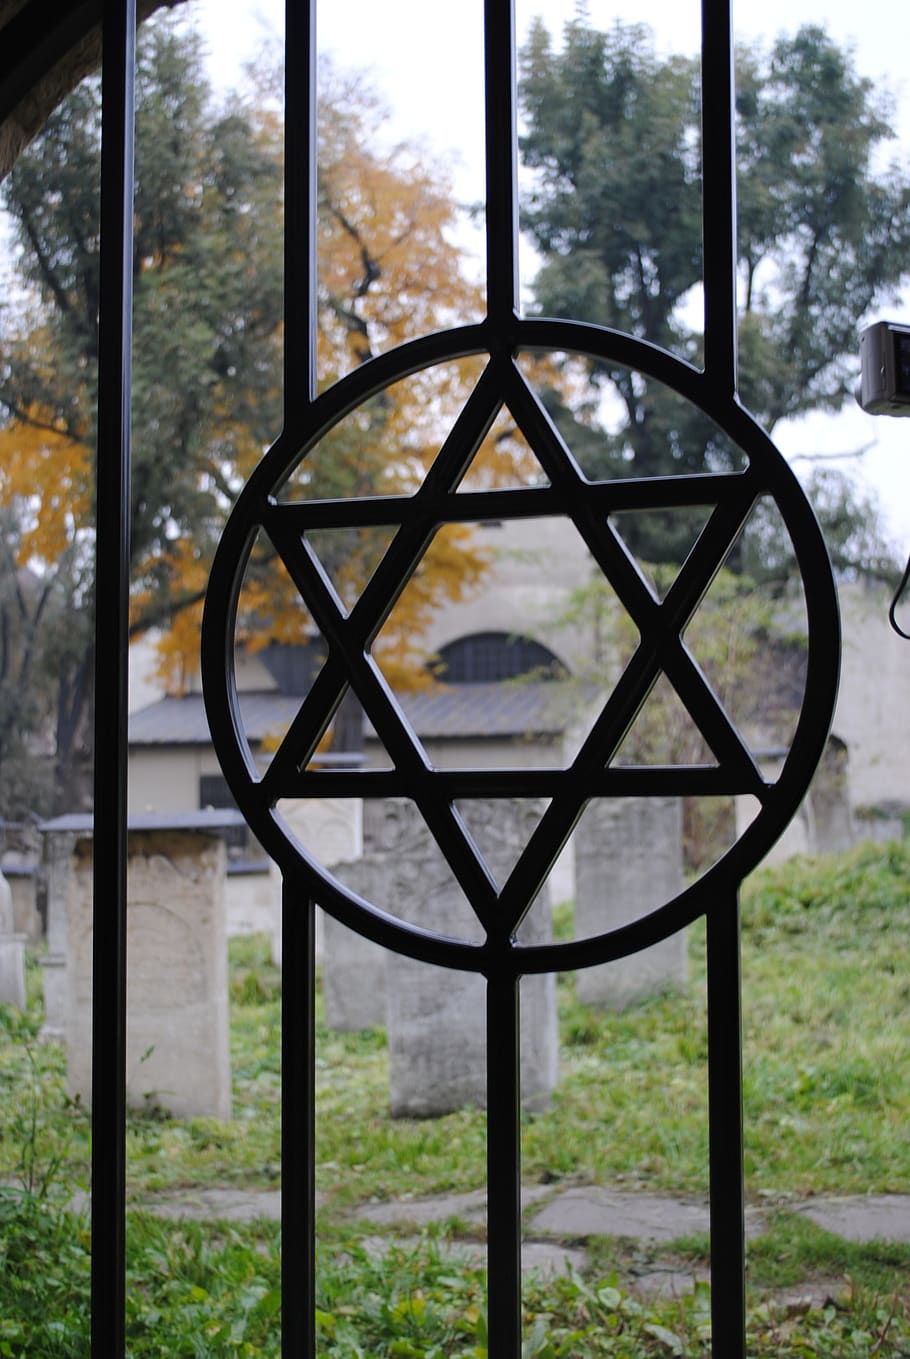 cementerio, judío, memorial, cementerio judío, estrella de david, ventana, día, vidrio - material, metal, transparente